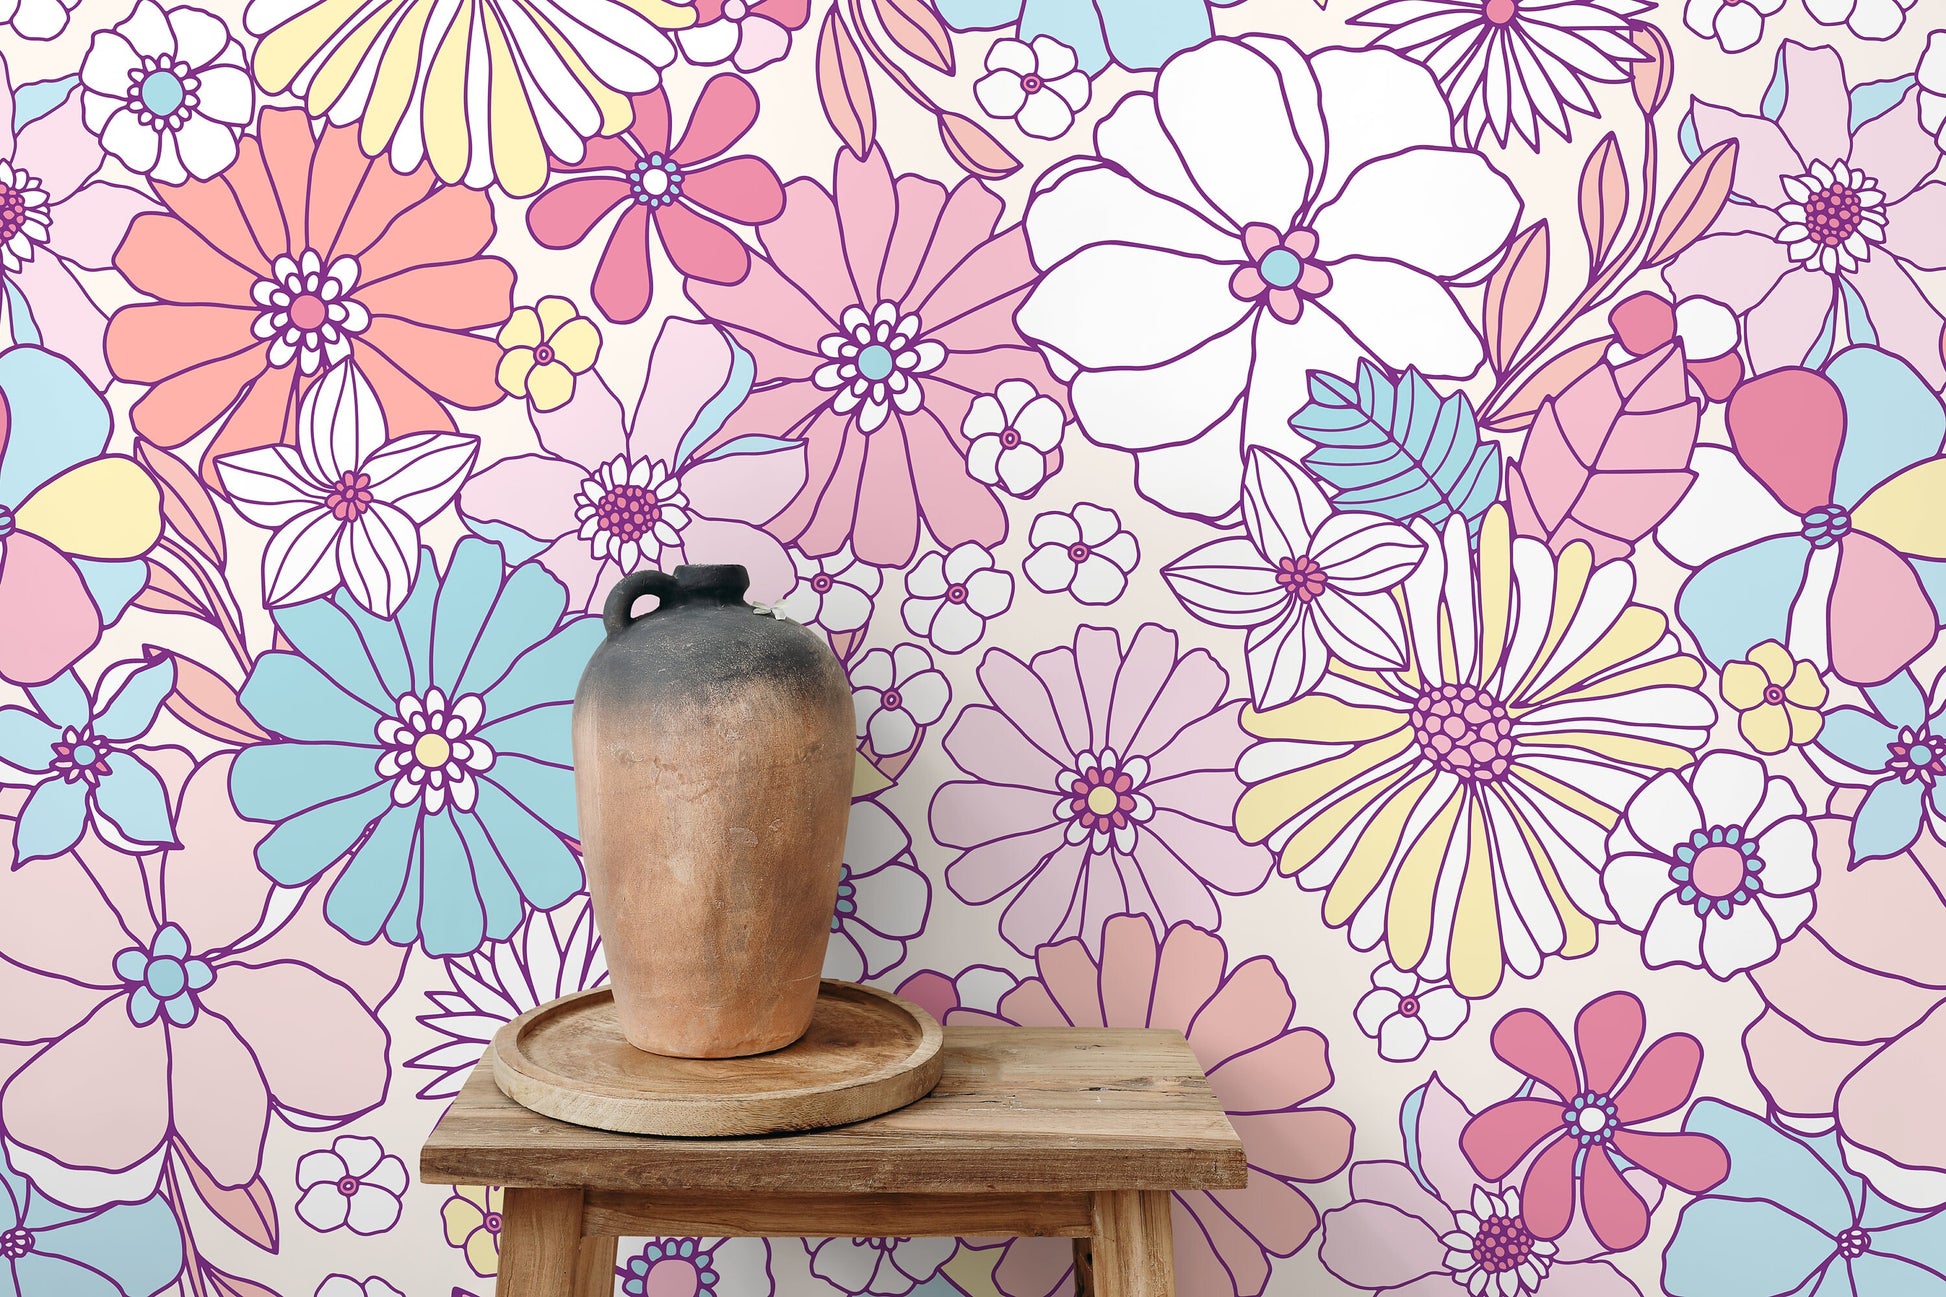 Retro Floral Wallpaper / Peel and Stick Wallpaper Removable Wallpaper Home Decor Wall Art Wall Decor Room Decor - D375